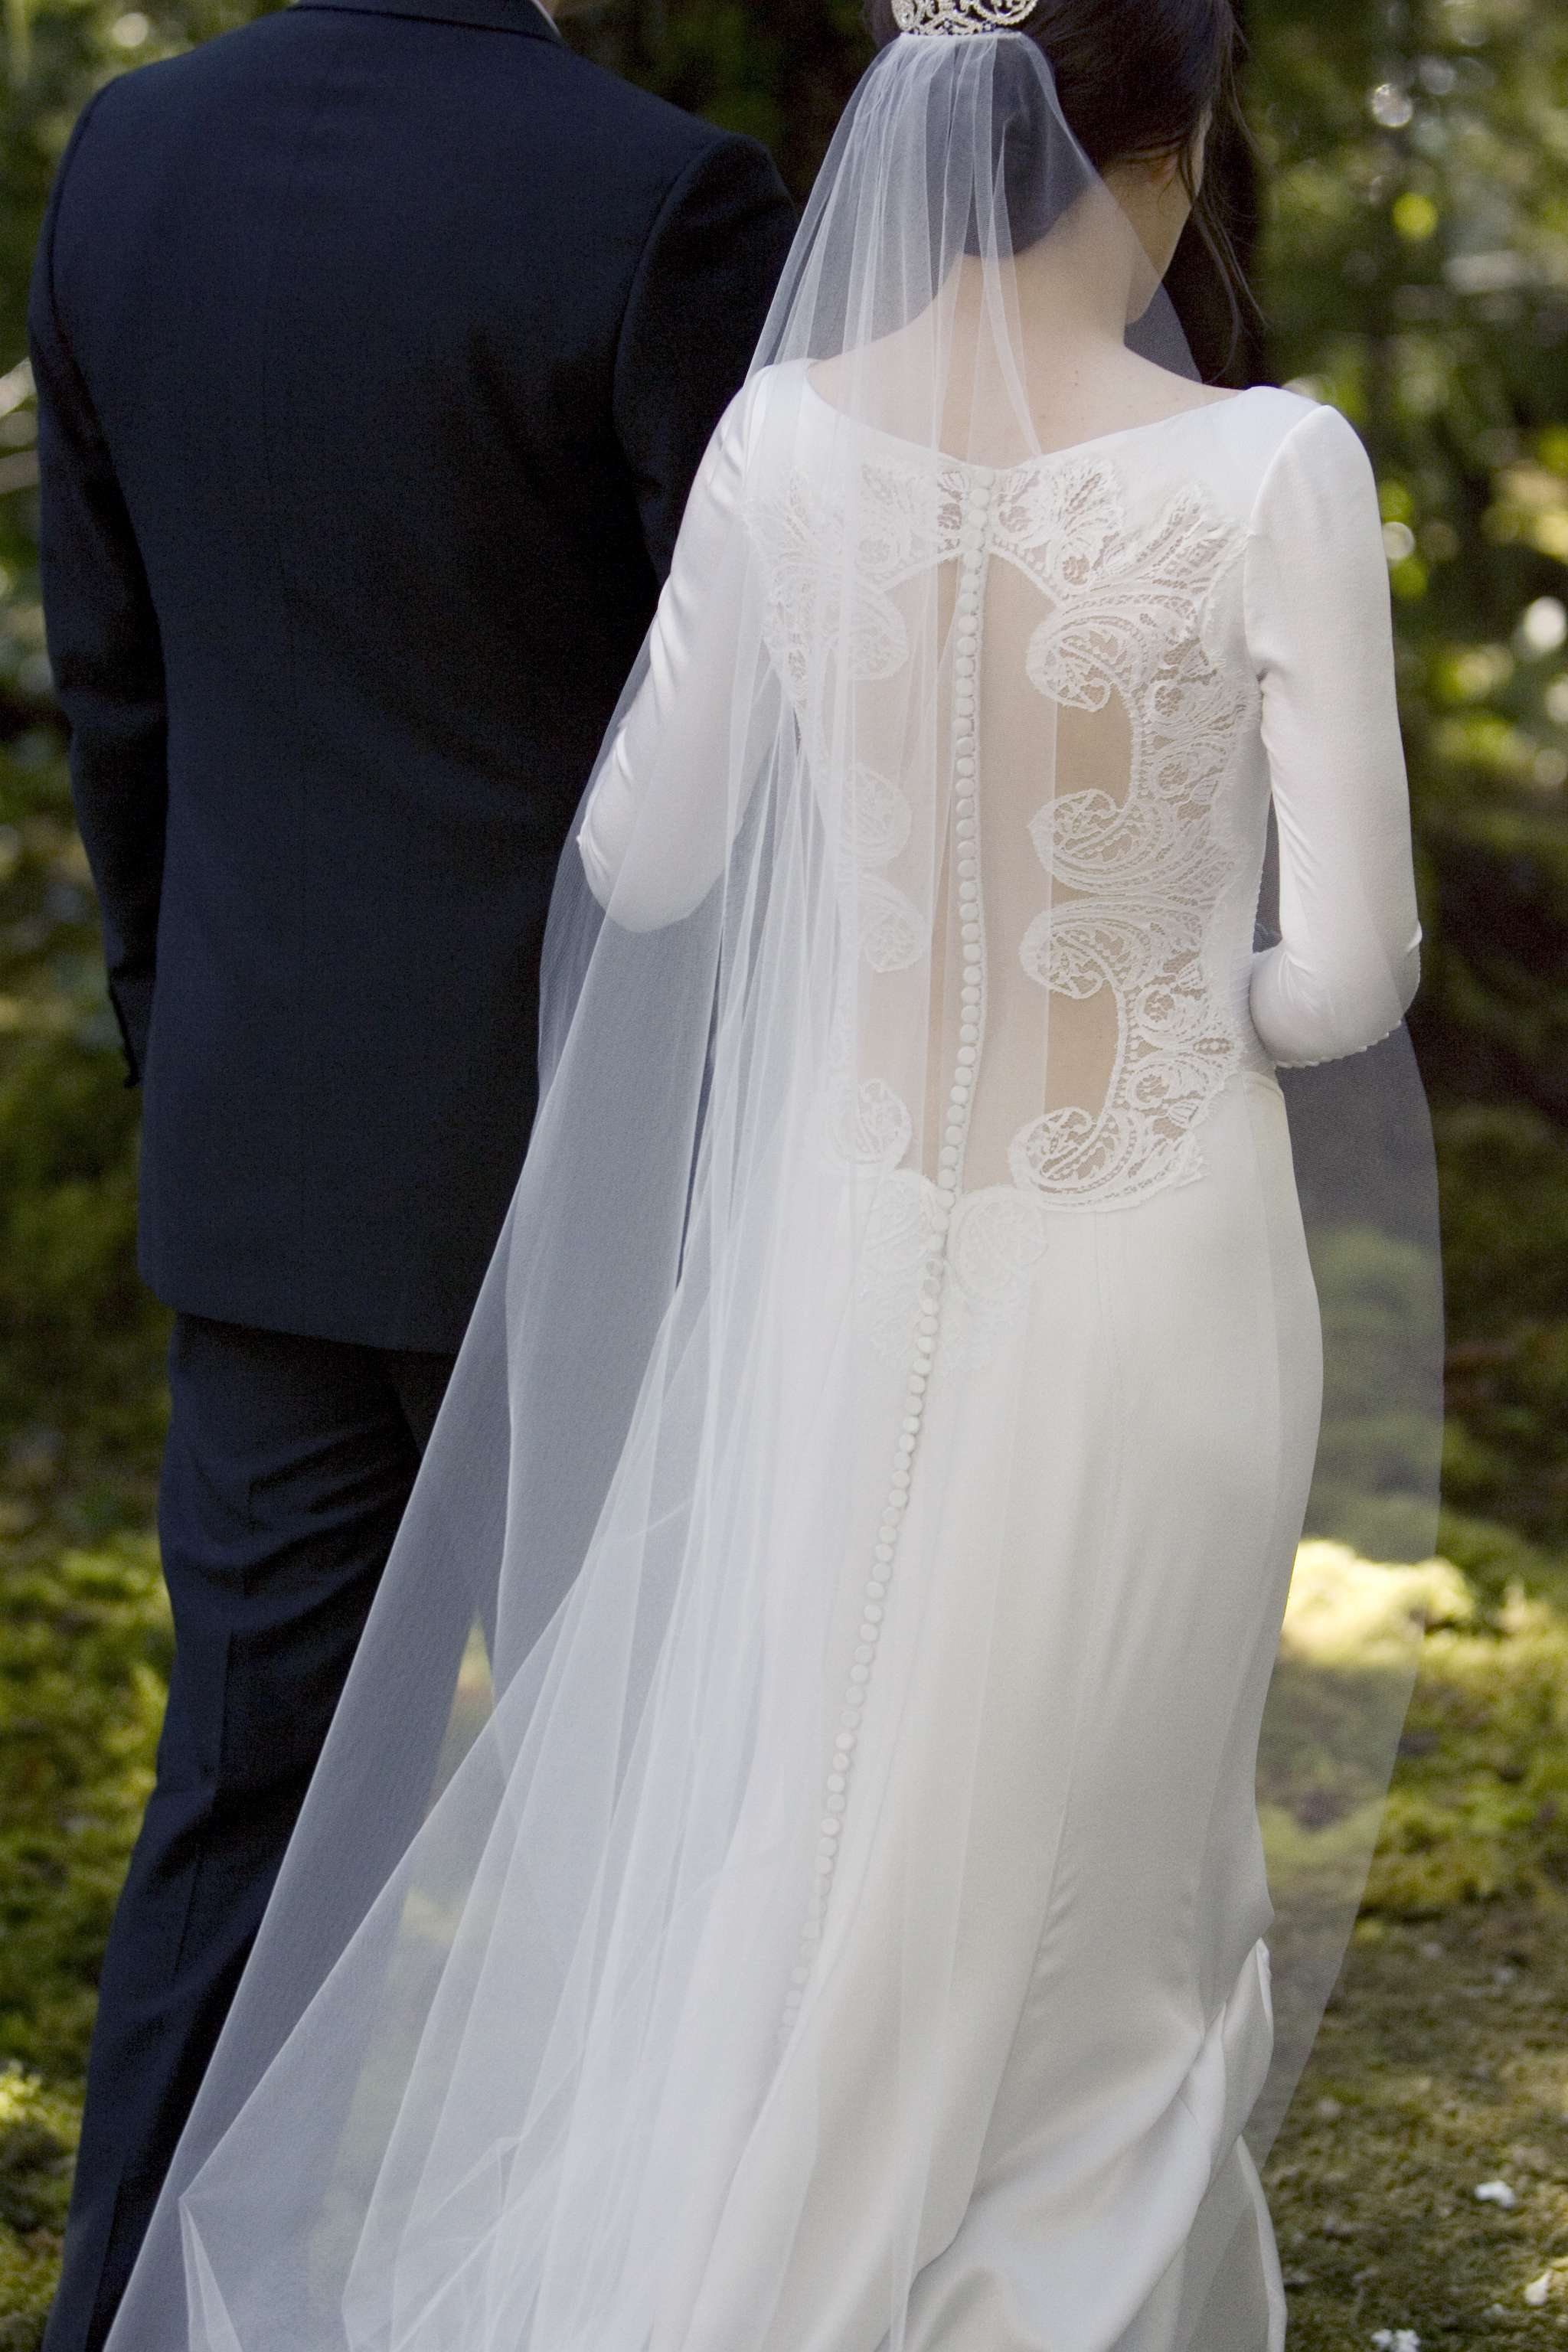 Twilight Breaking Dawn Part 1 Wedding Dress Images & Facts - HeyUGuys